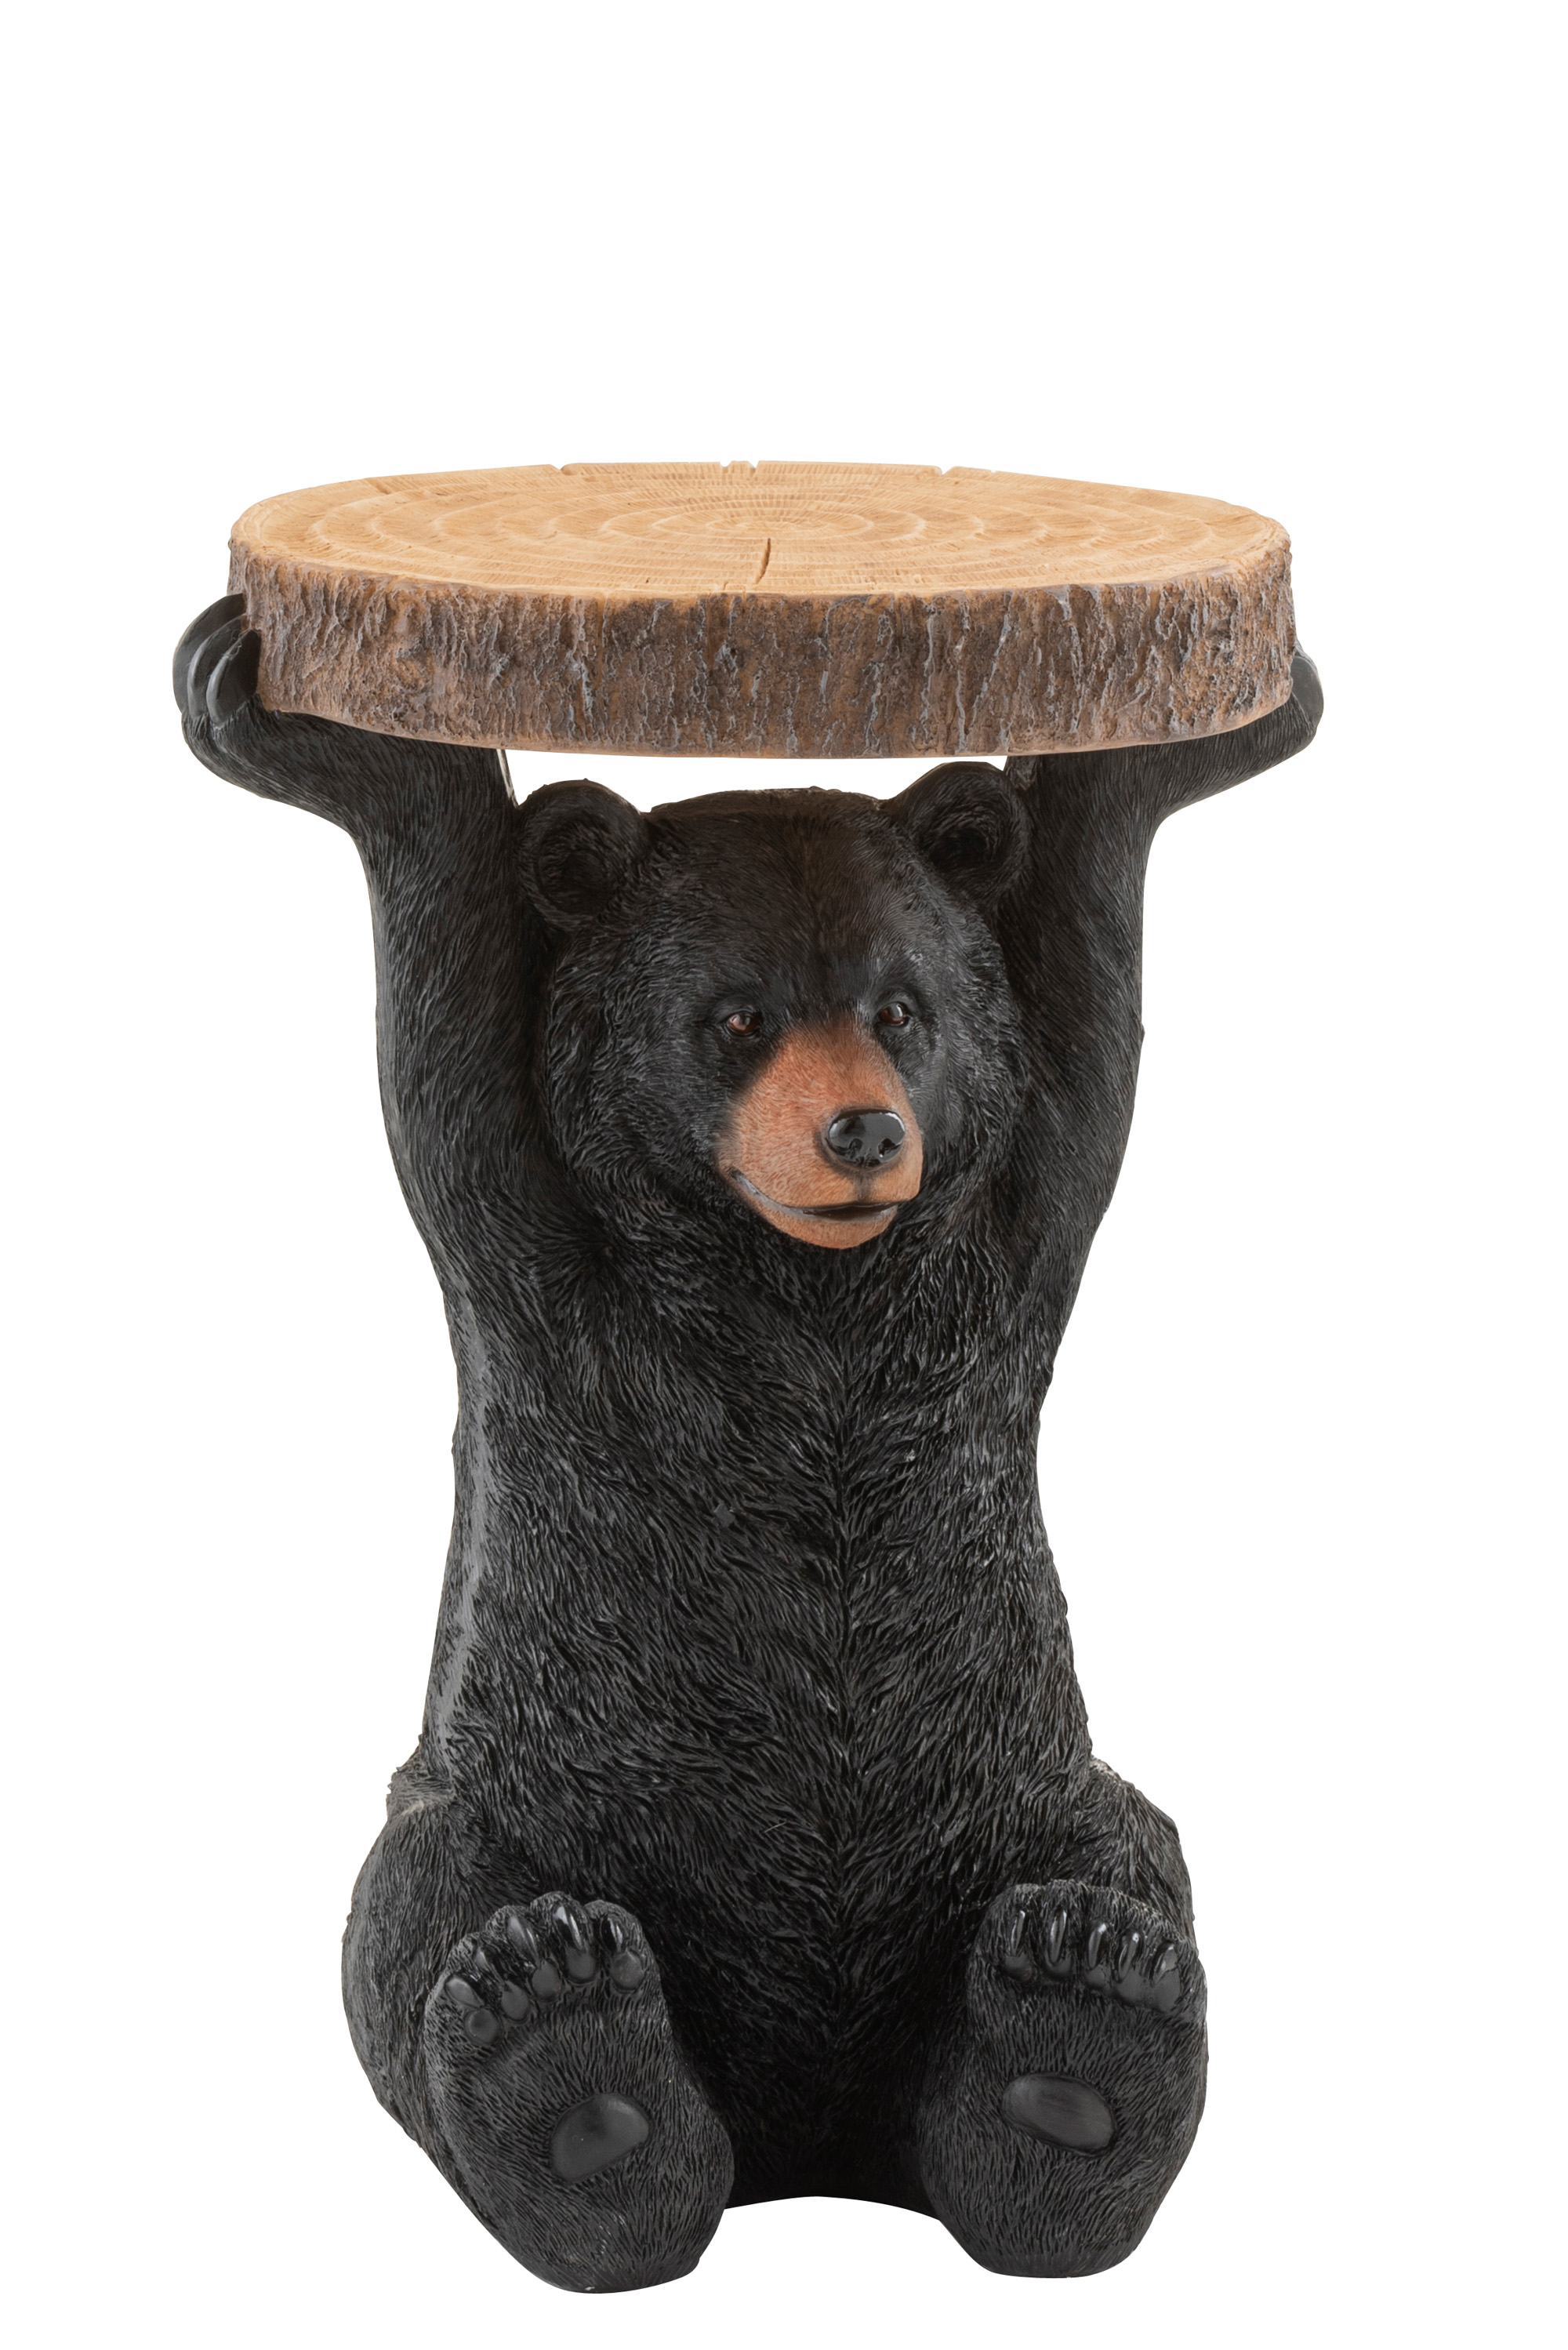 Jolipa Little table with Bear